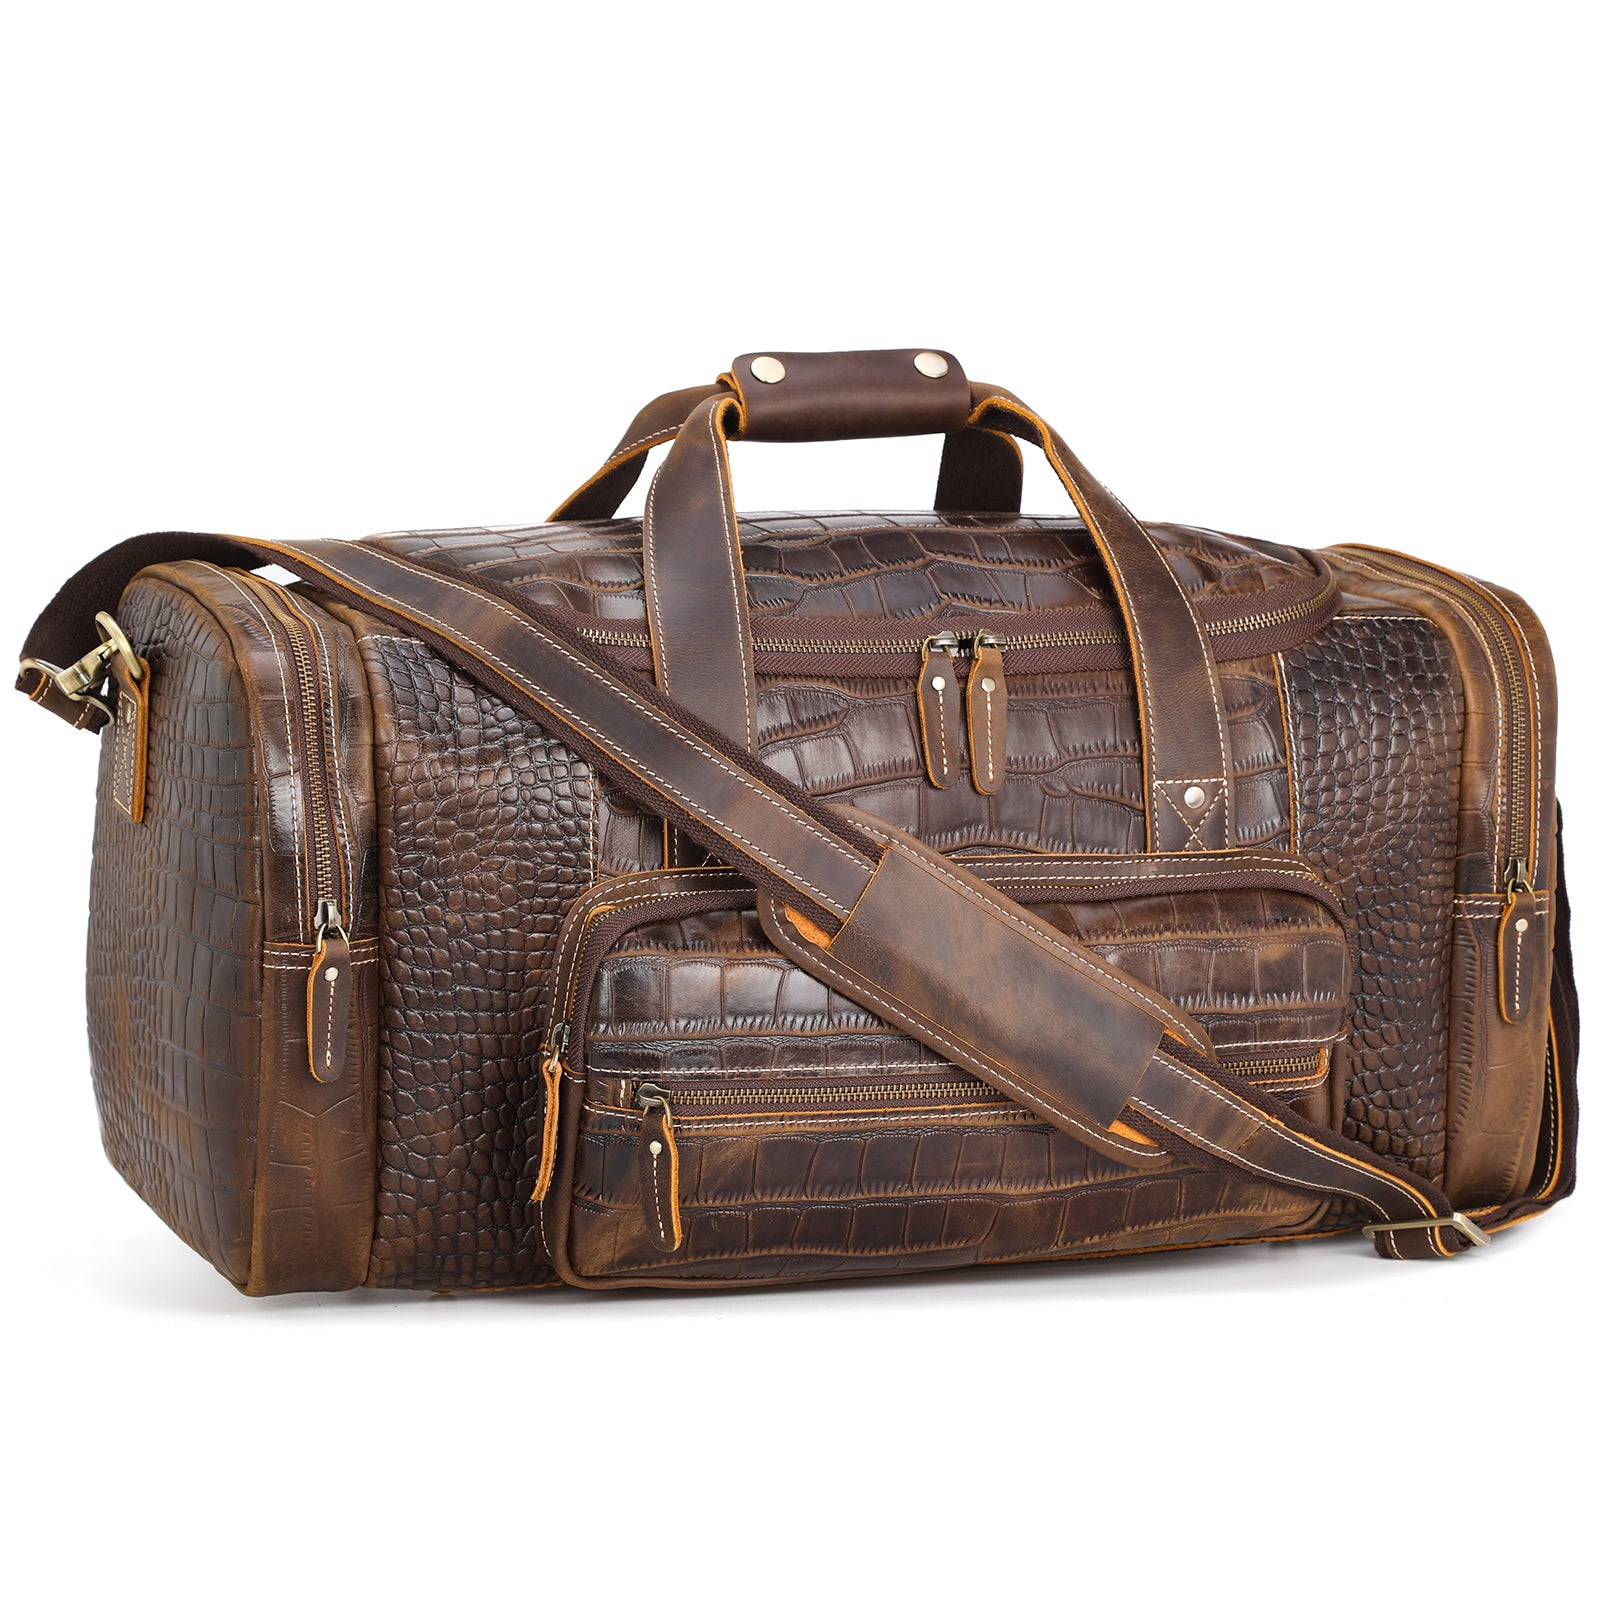 Polare 23" Full Grain Leather Gym Weekender Luggage Bag (Crocodile Dark Brown)